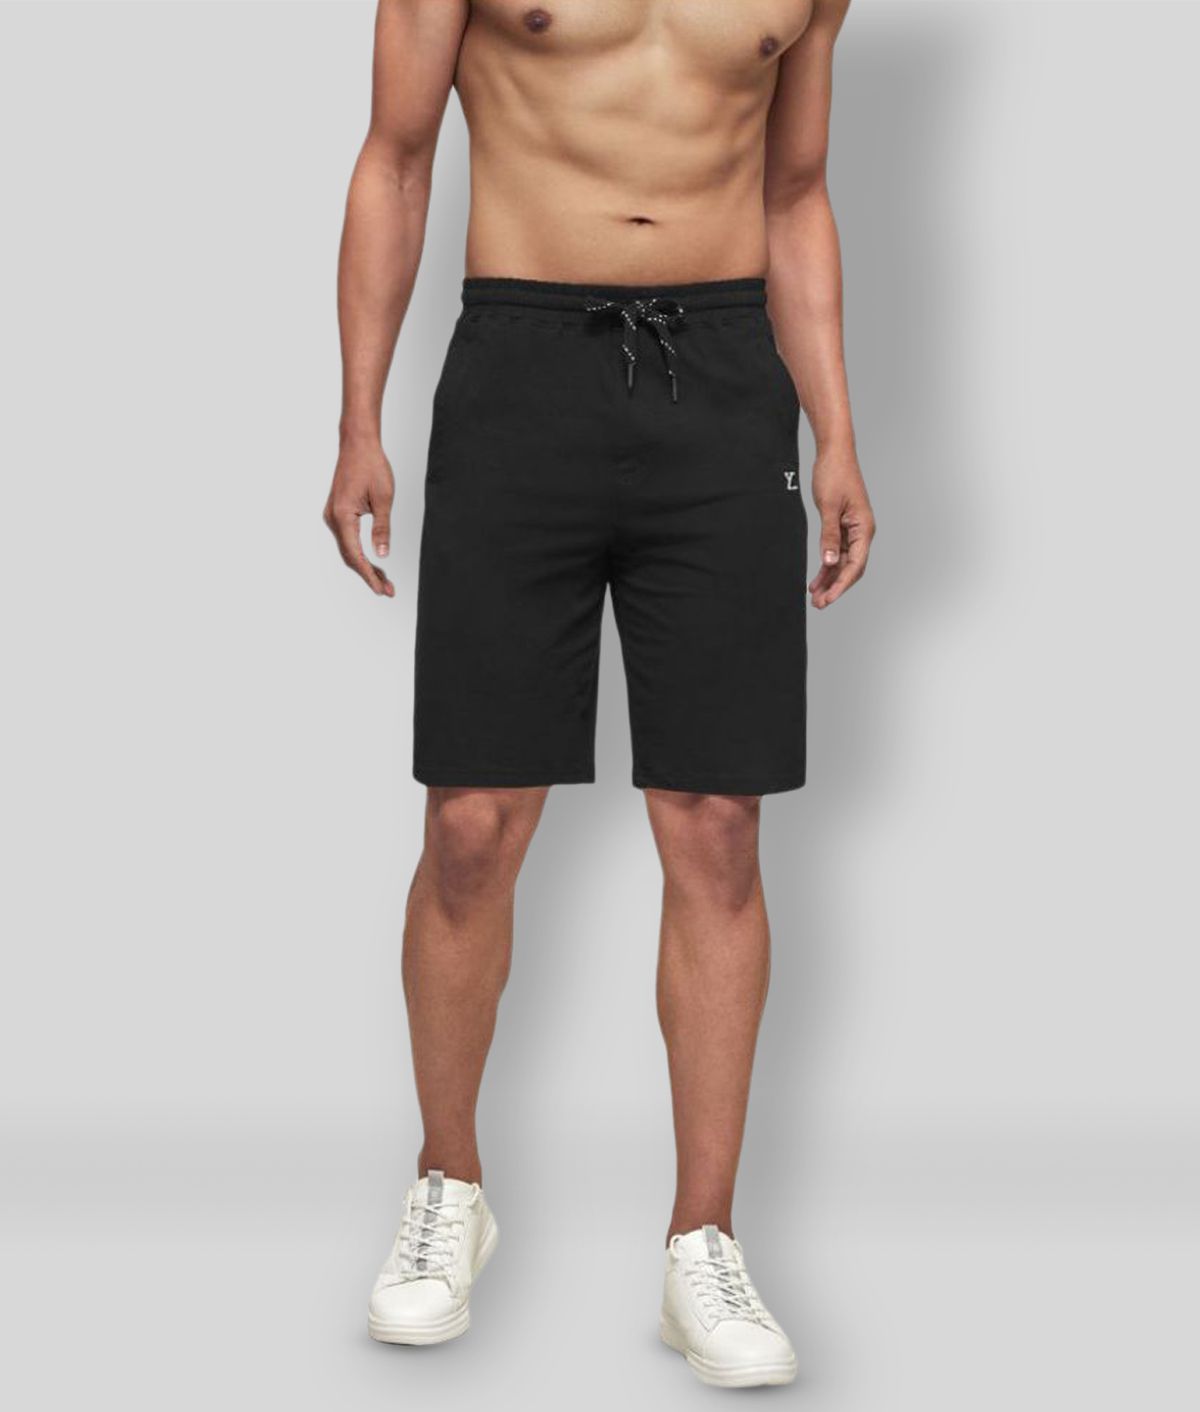     			XYXX - Black Cotton Blend Men's Shorts ( Pack of 1 )